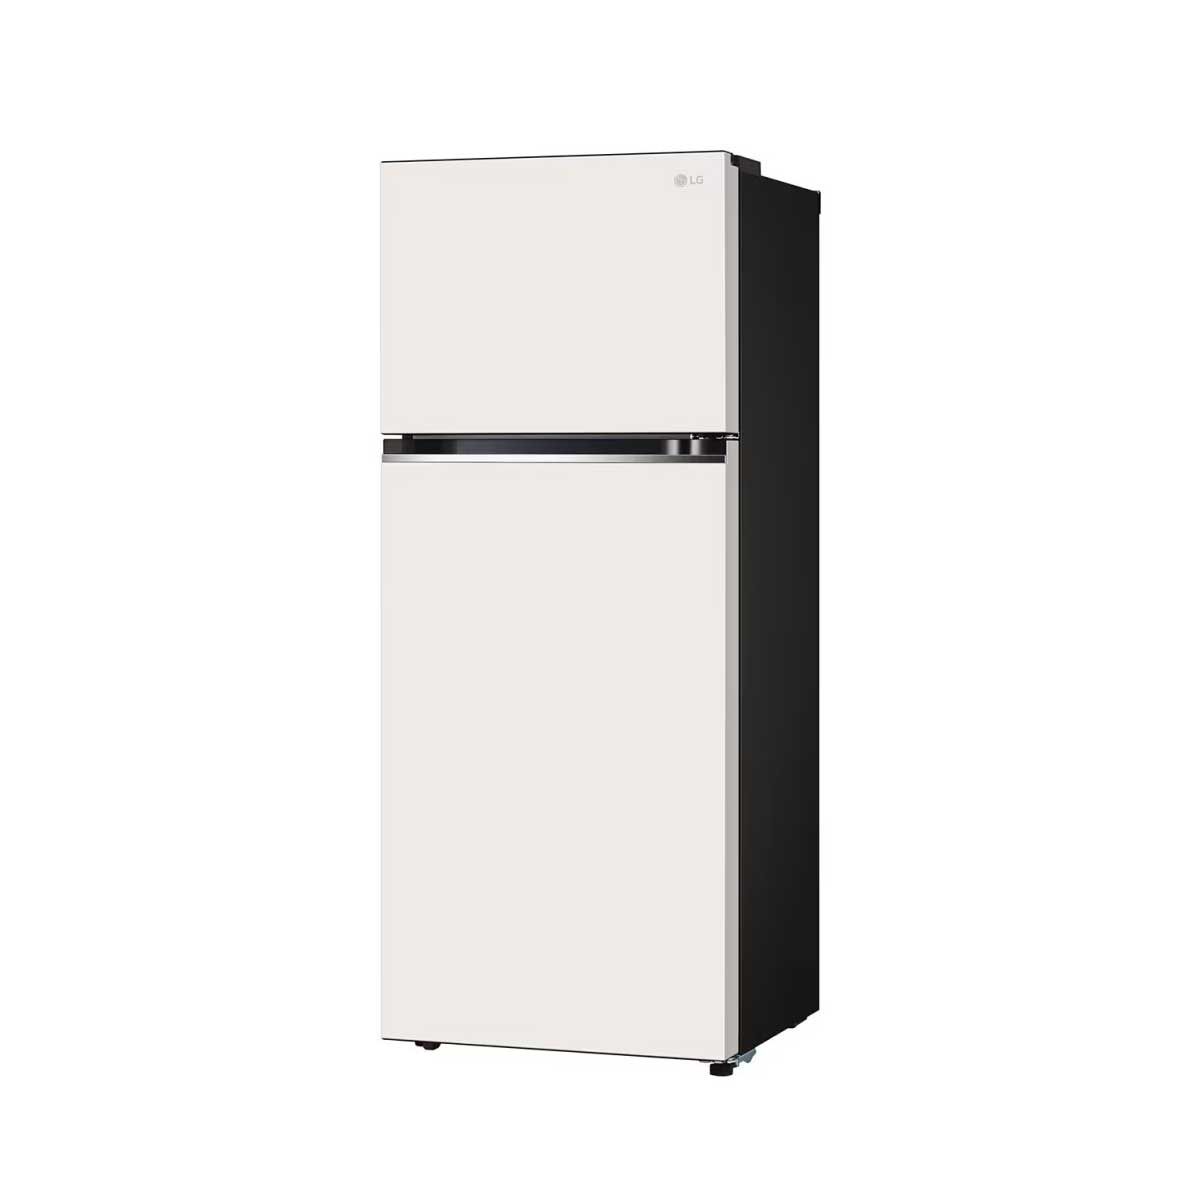 LG  ตู้เย็น 2 ประตู Macaron Series รุ่น GN-X392PBGB สีเบจ 14.0 คิว ระบบ Smart Inverter